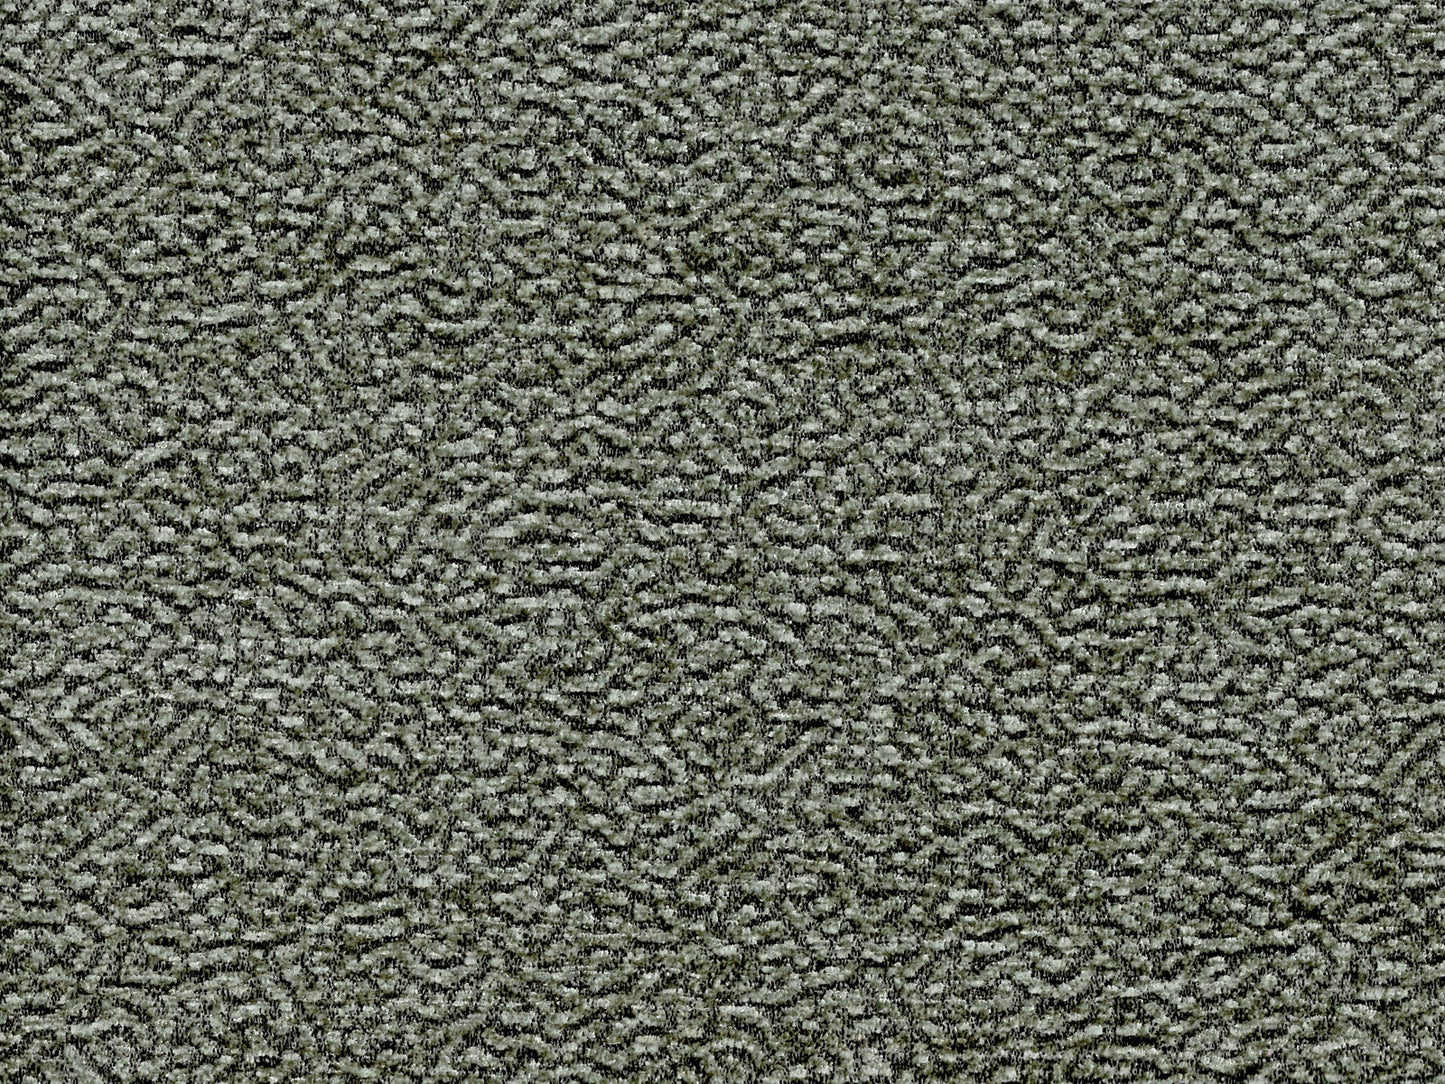 Fontana Fabric Samples - Rydan Interiors